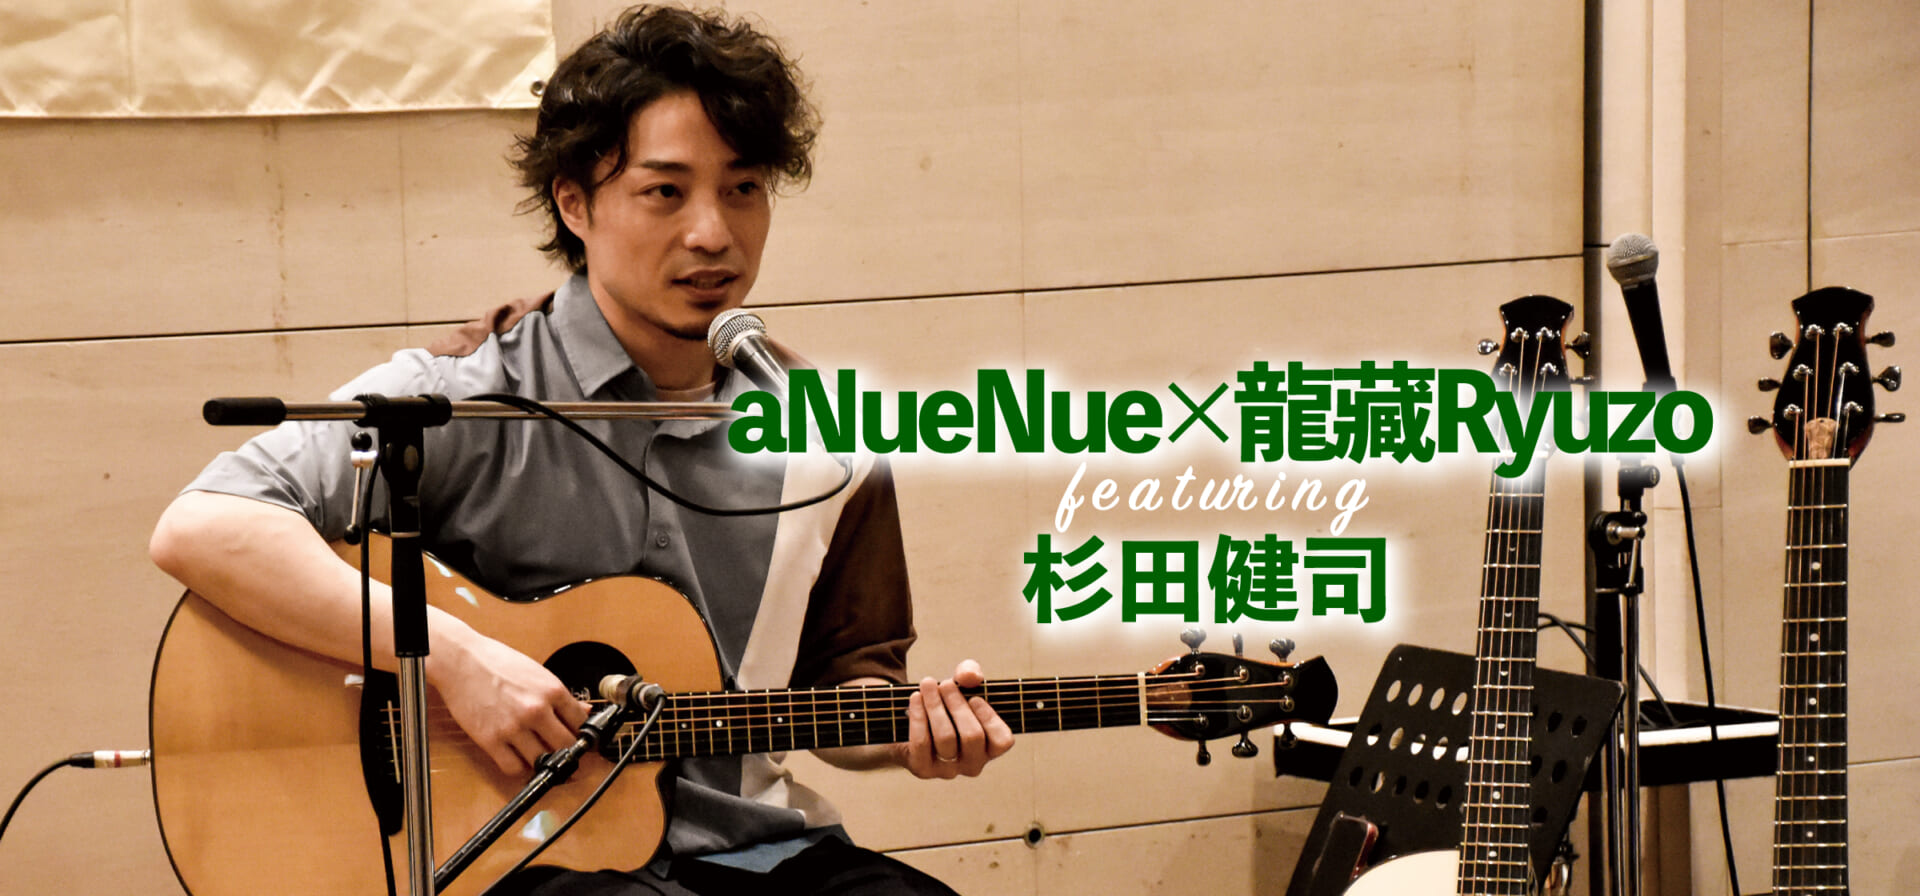 aNueNue × 龍藏Ryuzo featuring 杉田健司【サウンドメッセ ・レポート】